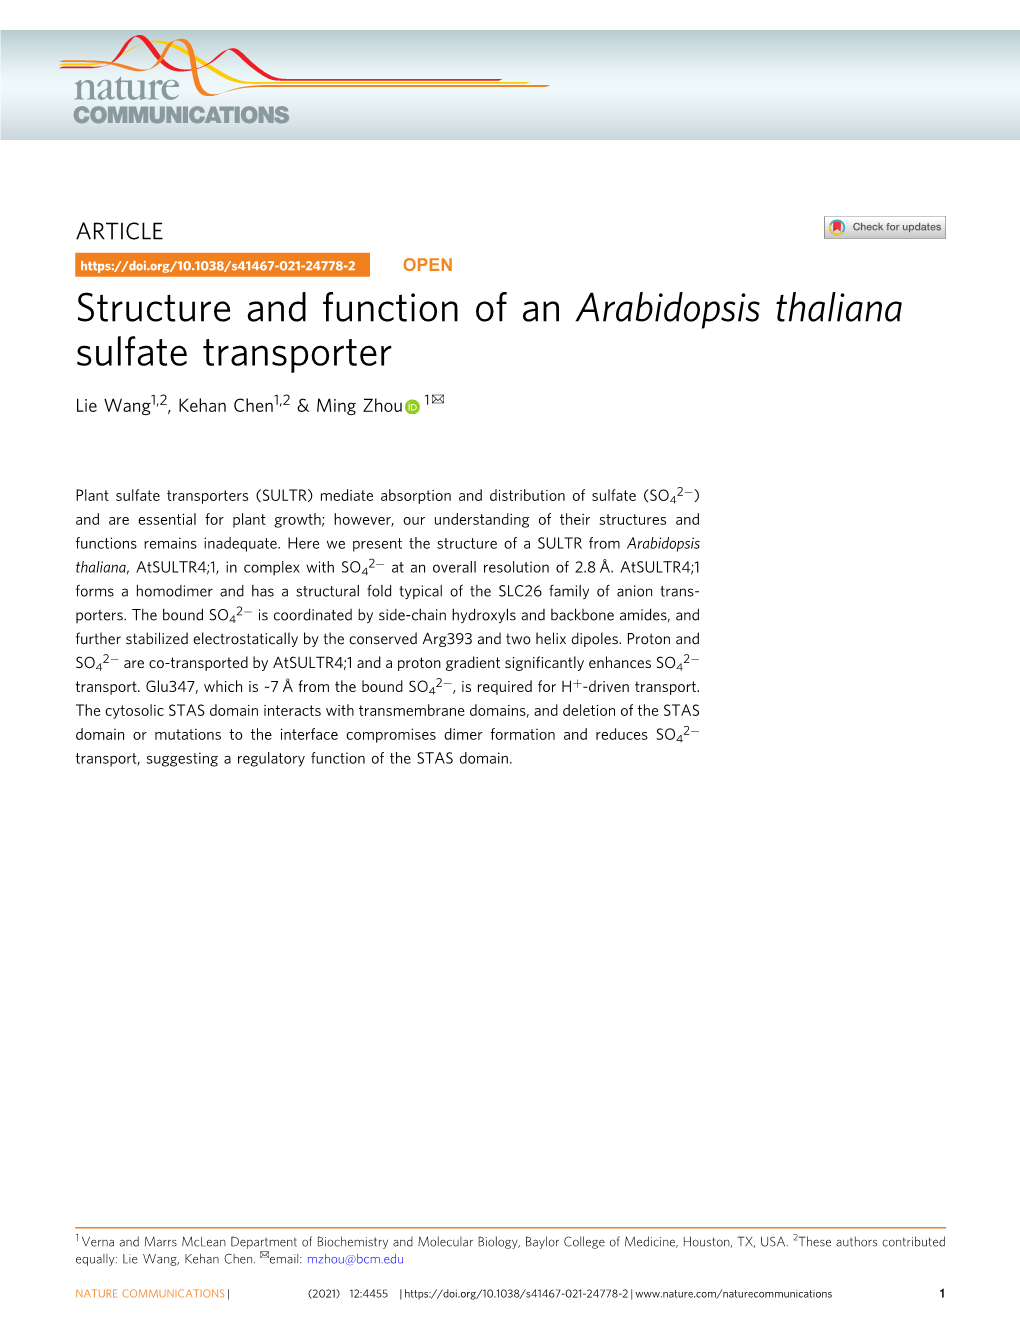 Structure and Function of an Arabidopsis Thaliana Sulfate Transporter ✉ Lie Wang1,2, Kehan Chen1,2 & Ming Zhou 1